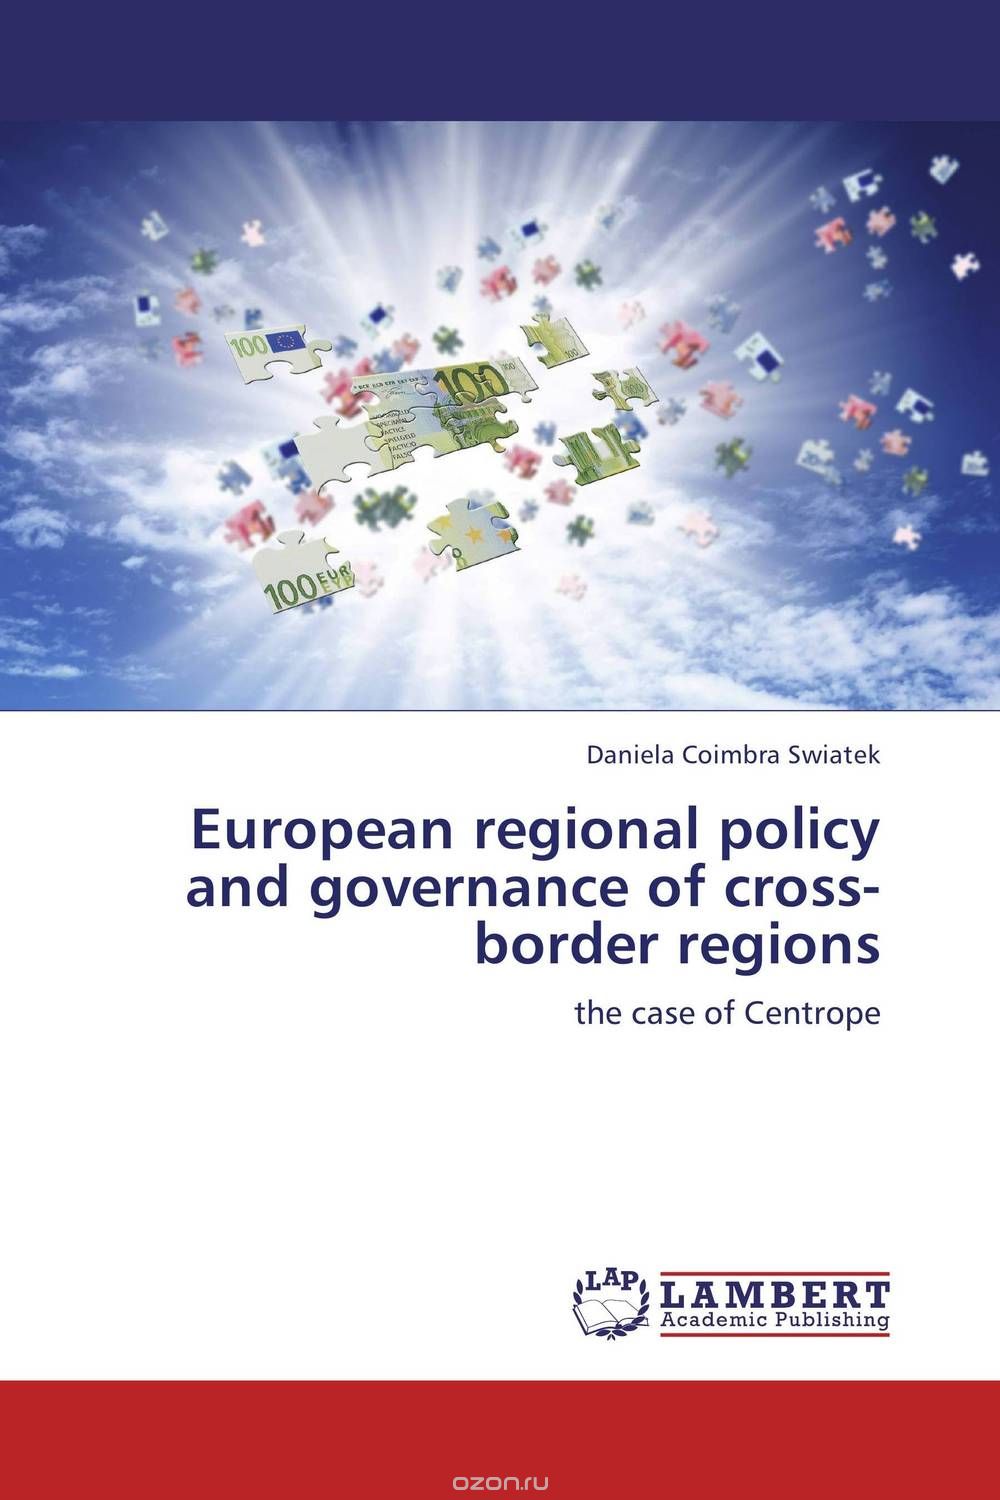 Скачать книгу "European regional policy and governance of cross-border regions"